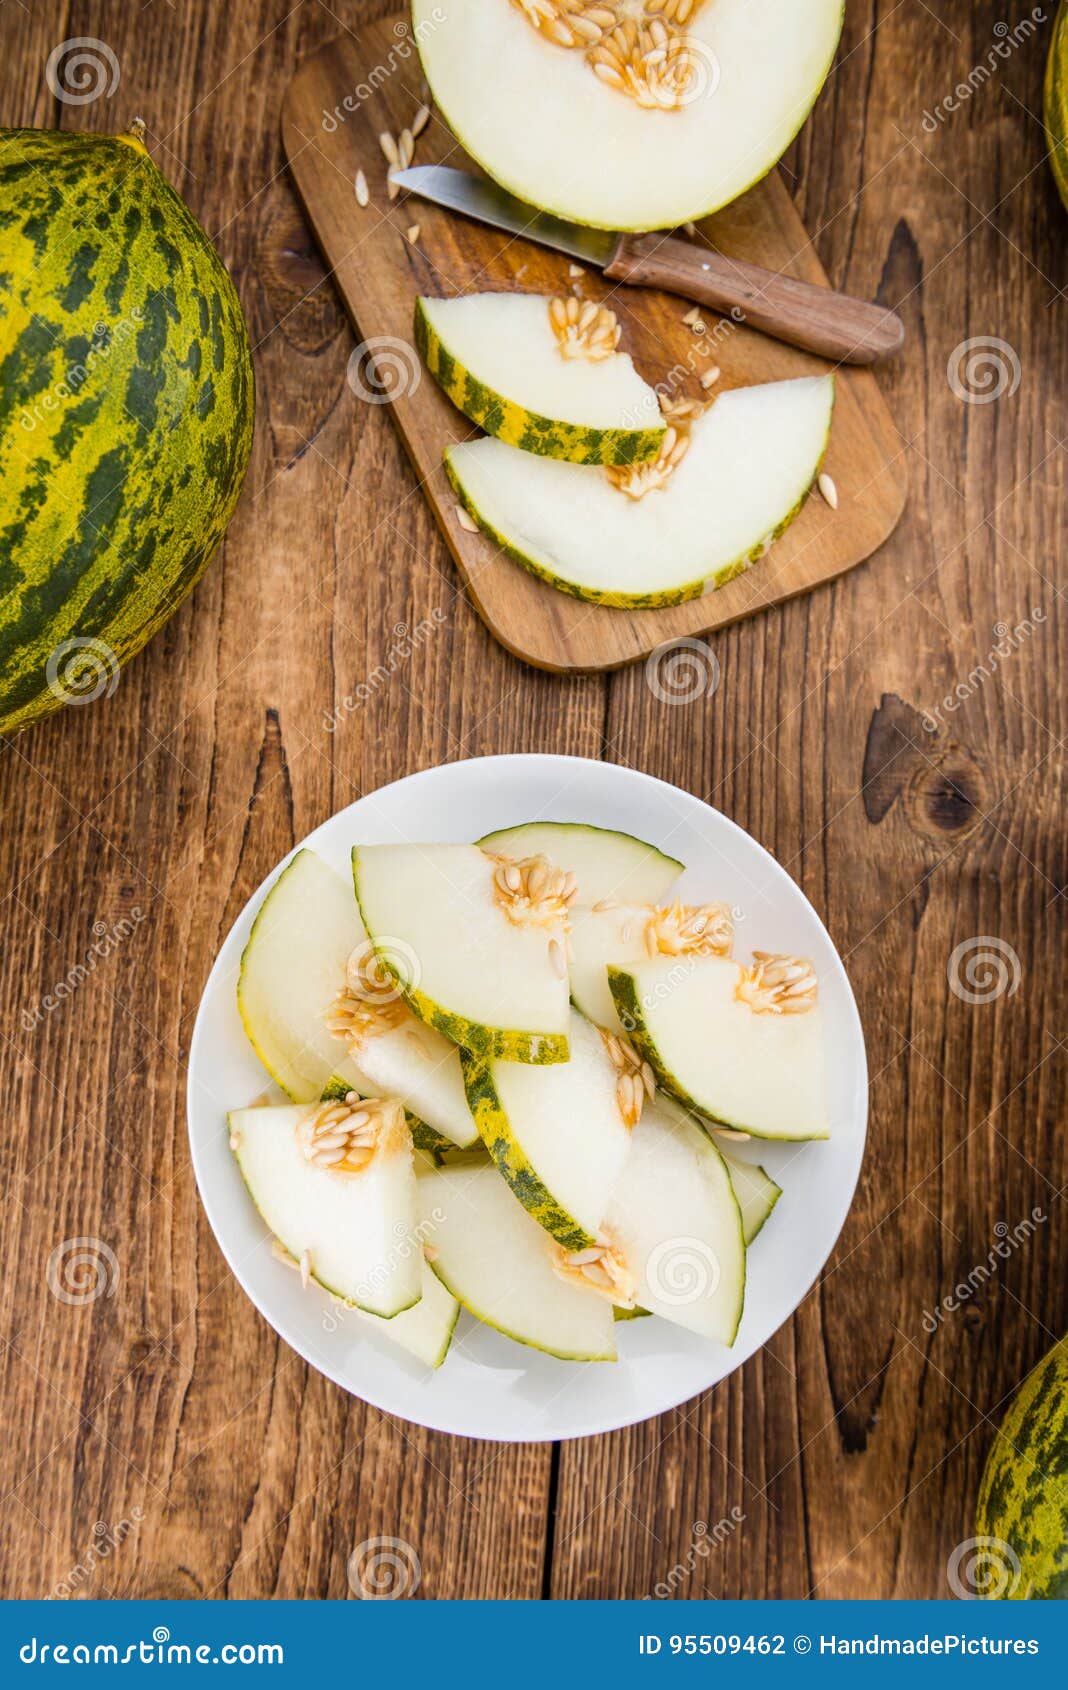 portion of fresh futuro melon on wooden background